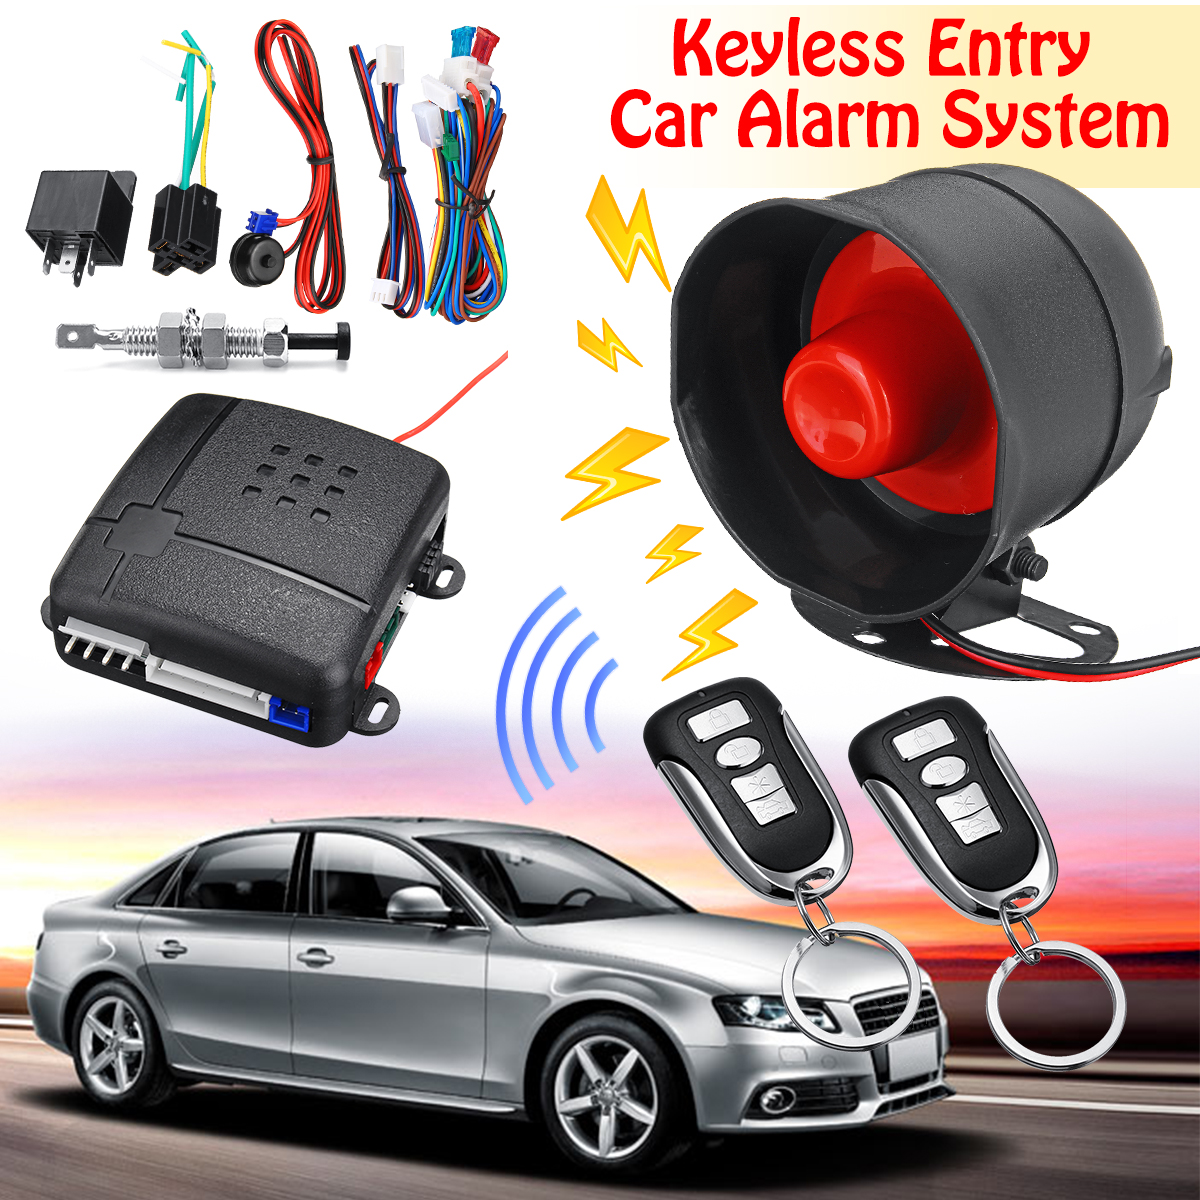 Аларм цена. IMEDI car Alarm сигнализация 2008 года. Сигнализация professional Alarm автомобильга. Car Keyless entry System. Alarm System наклейка на авто.